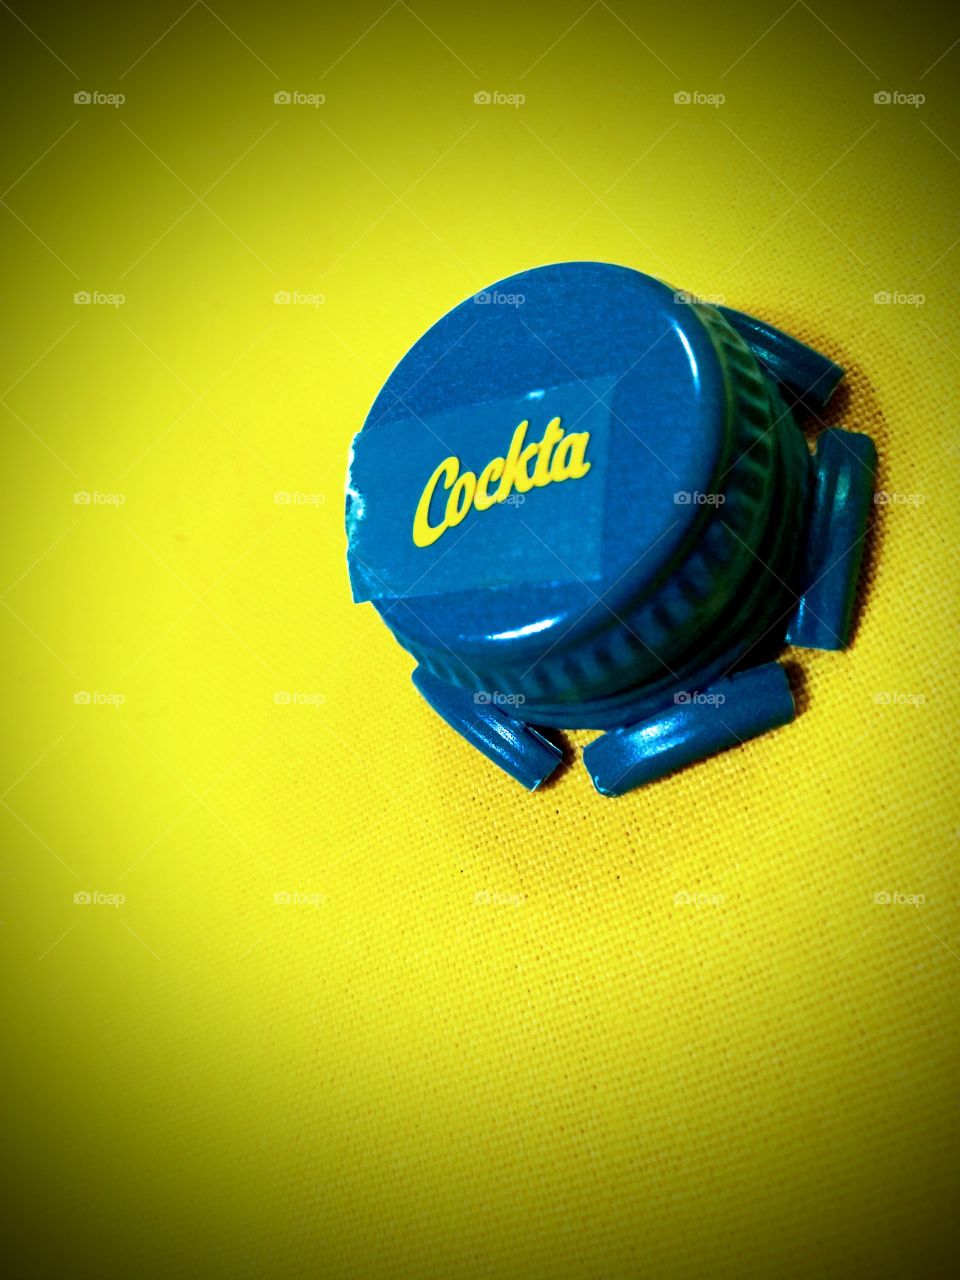 Cockta bottle cap